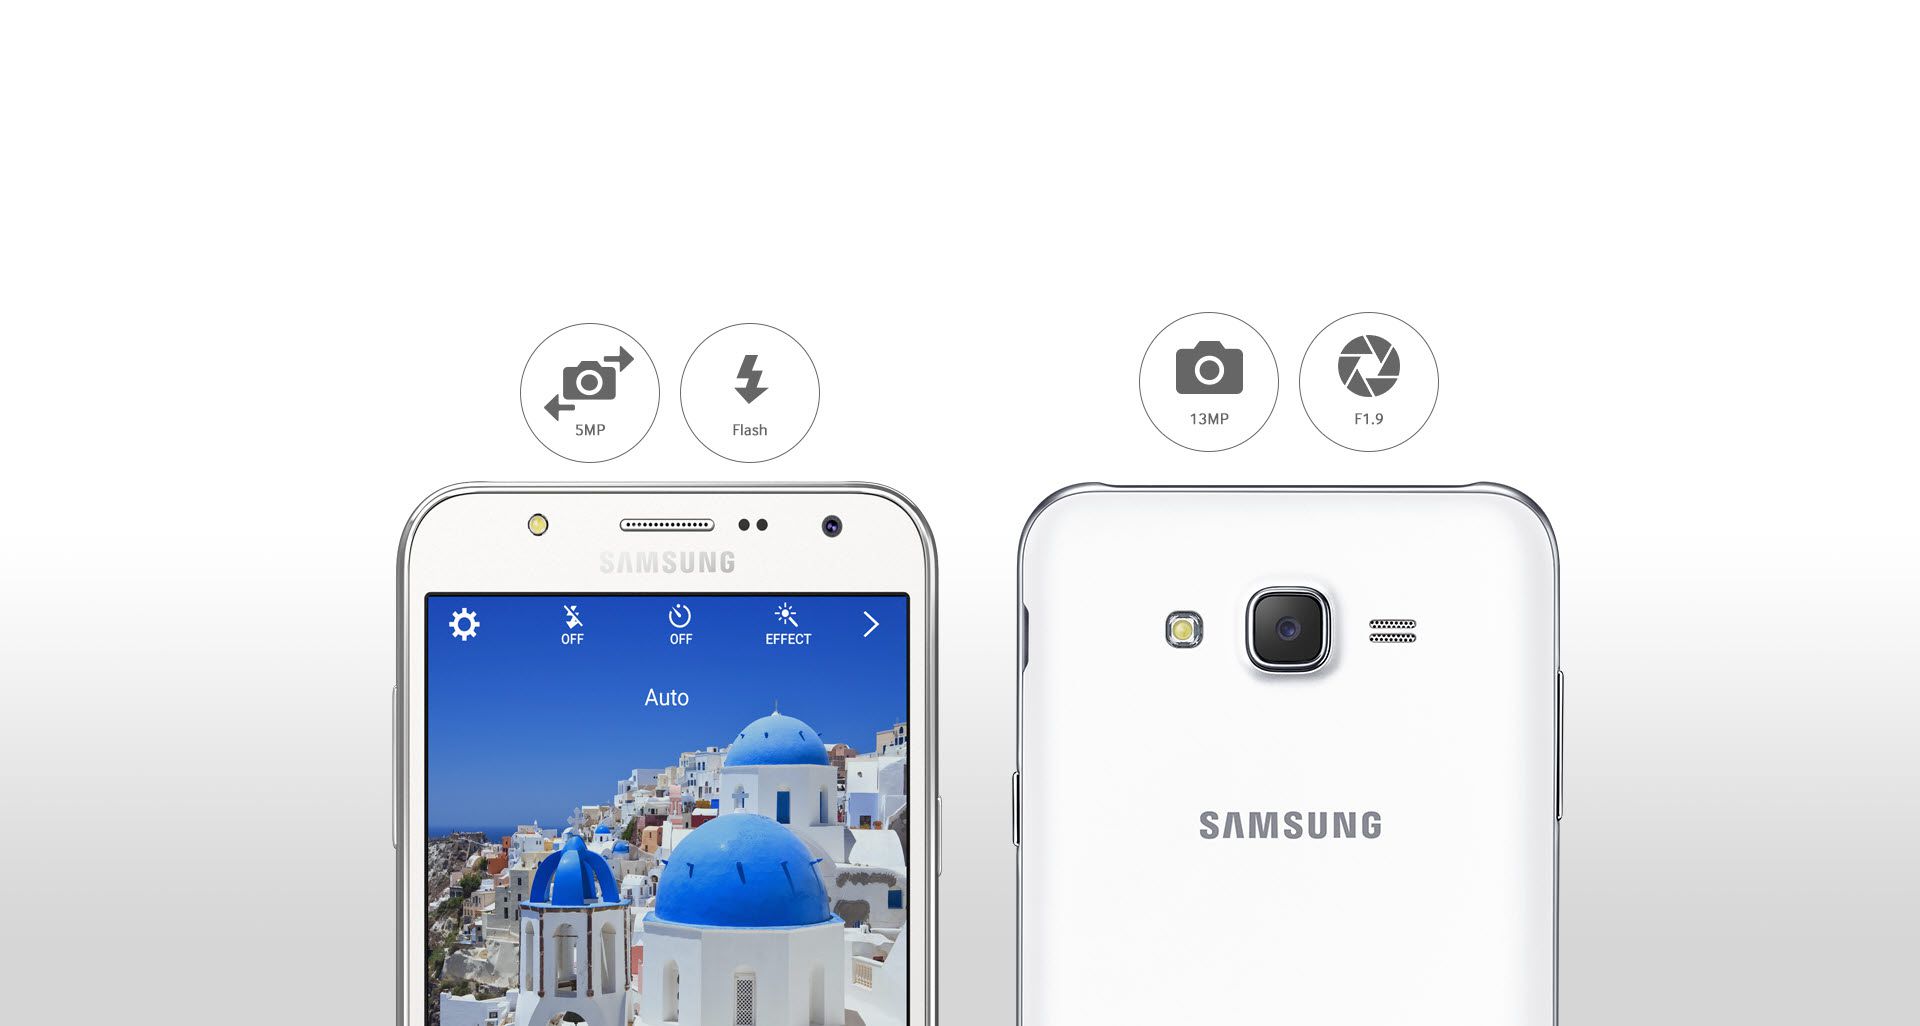 [image] Samsung Galaxy J7 Camera